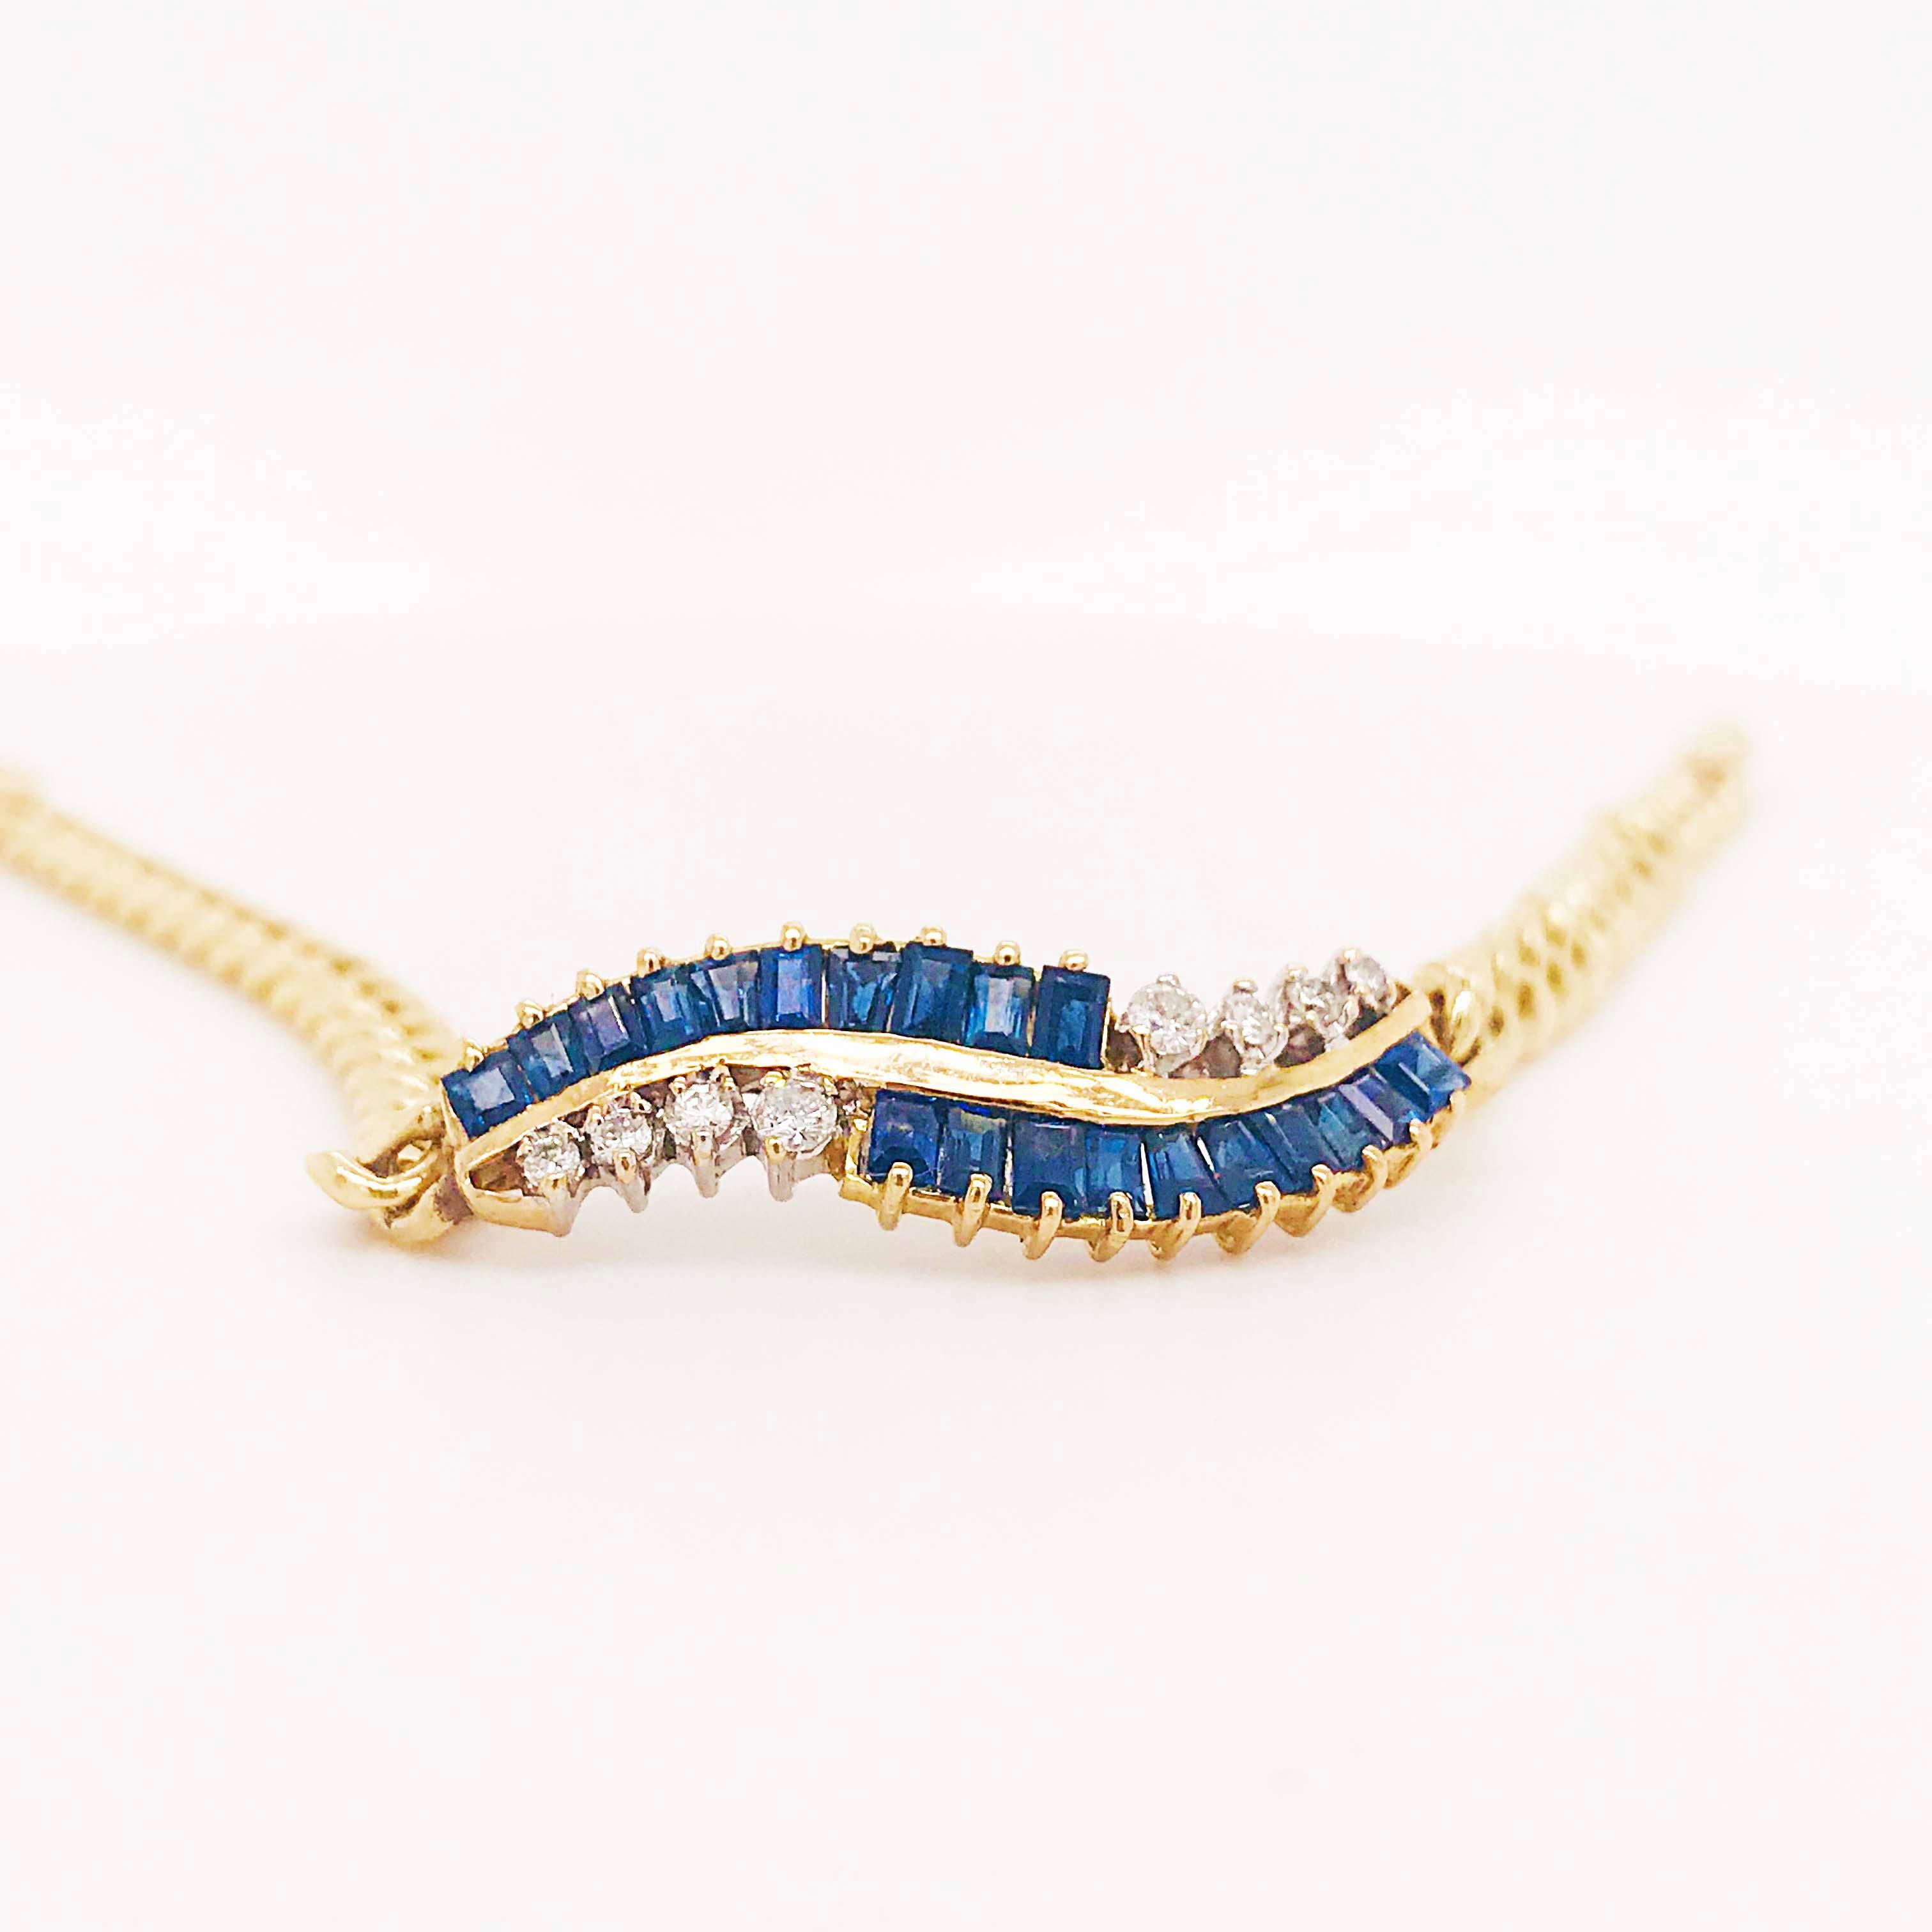 Round Cut Blue Sapphire and Diamond Chain Bracelet, 14 Karat Gold Curb Chain Link Bracelet